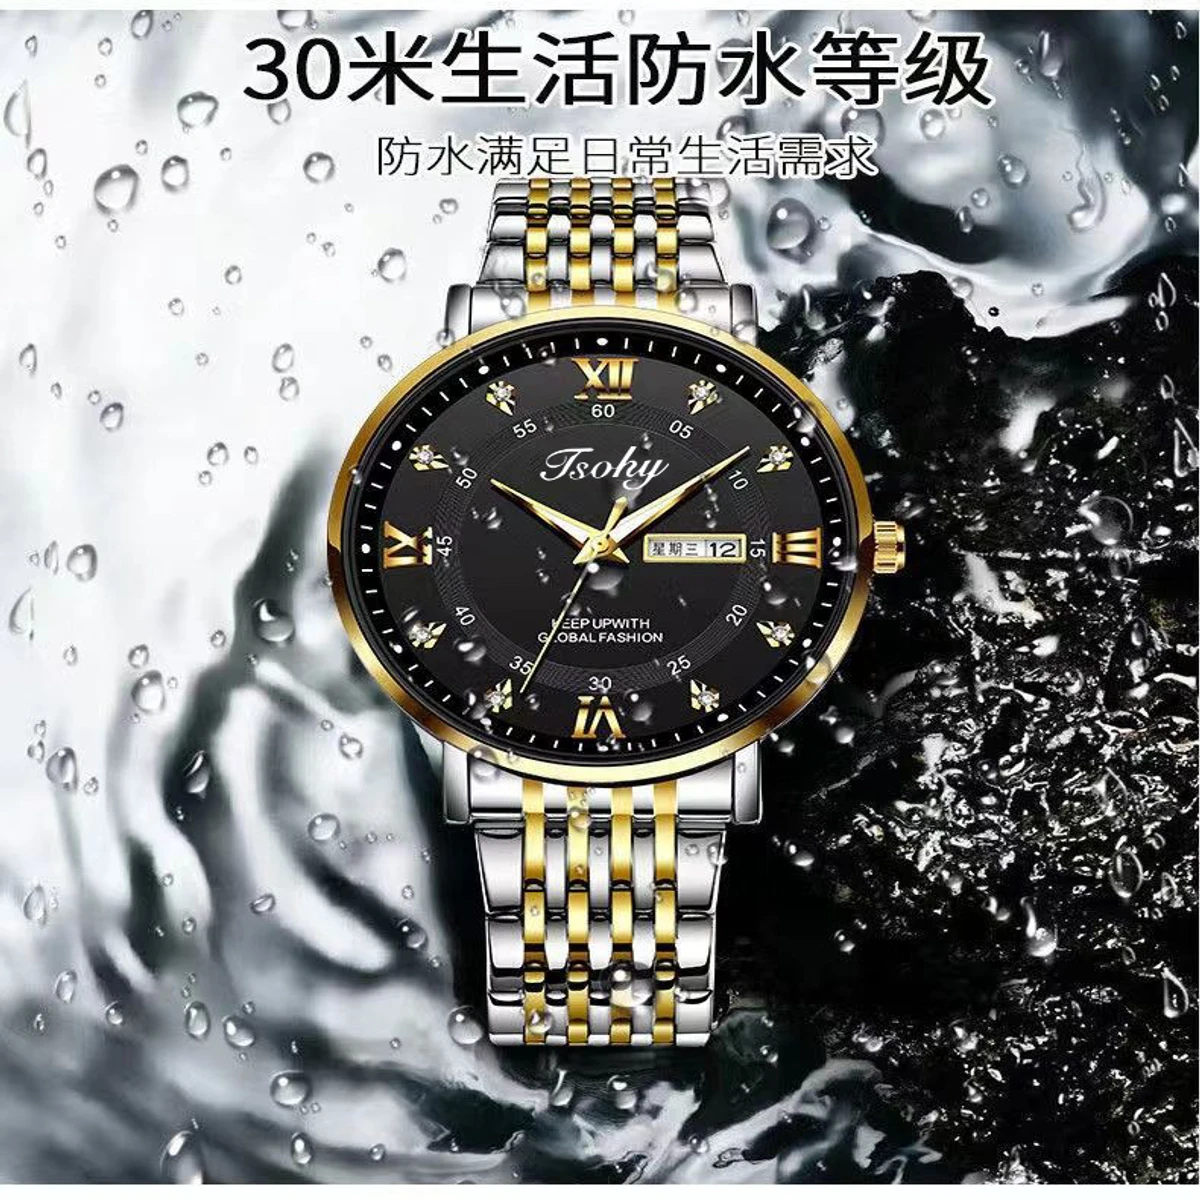 Luxury ISOHY authentic men's watch waterproof night light dual calendar watch men's quartz watch ceiling glass- Golden & Black